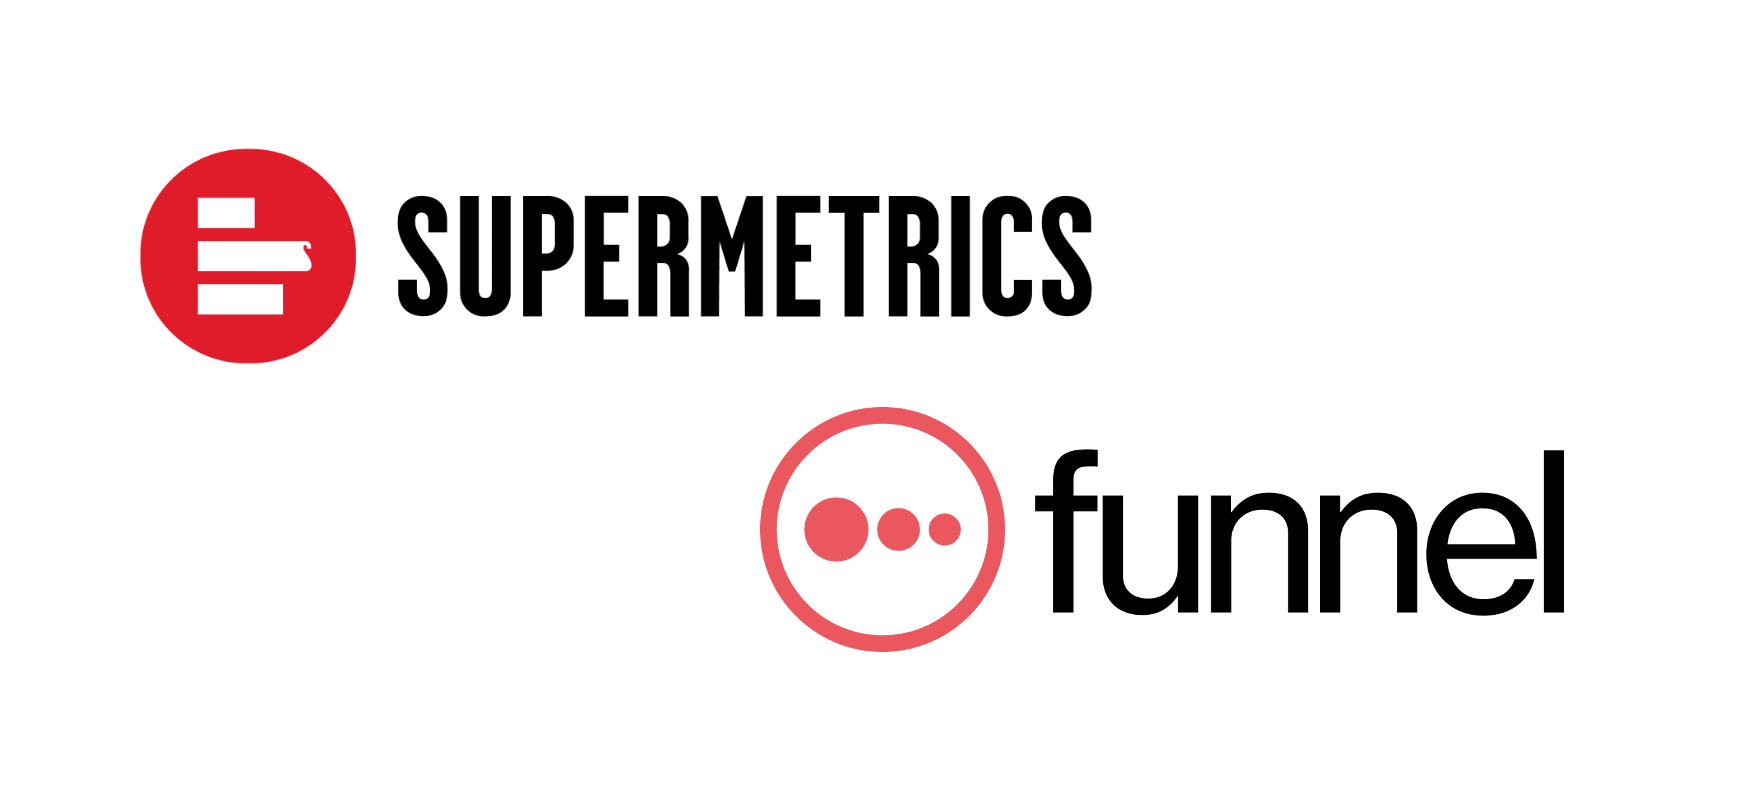 Supermetrics and Funnel